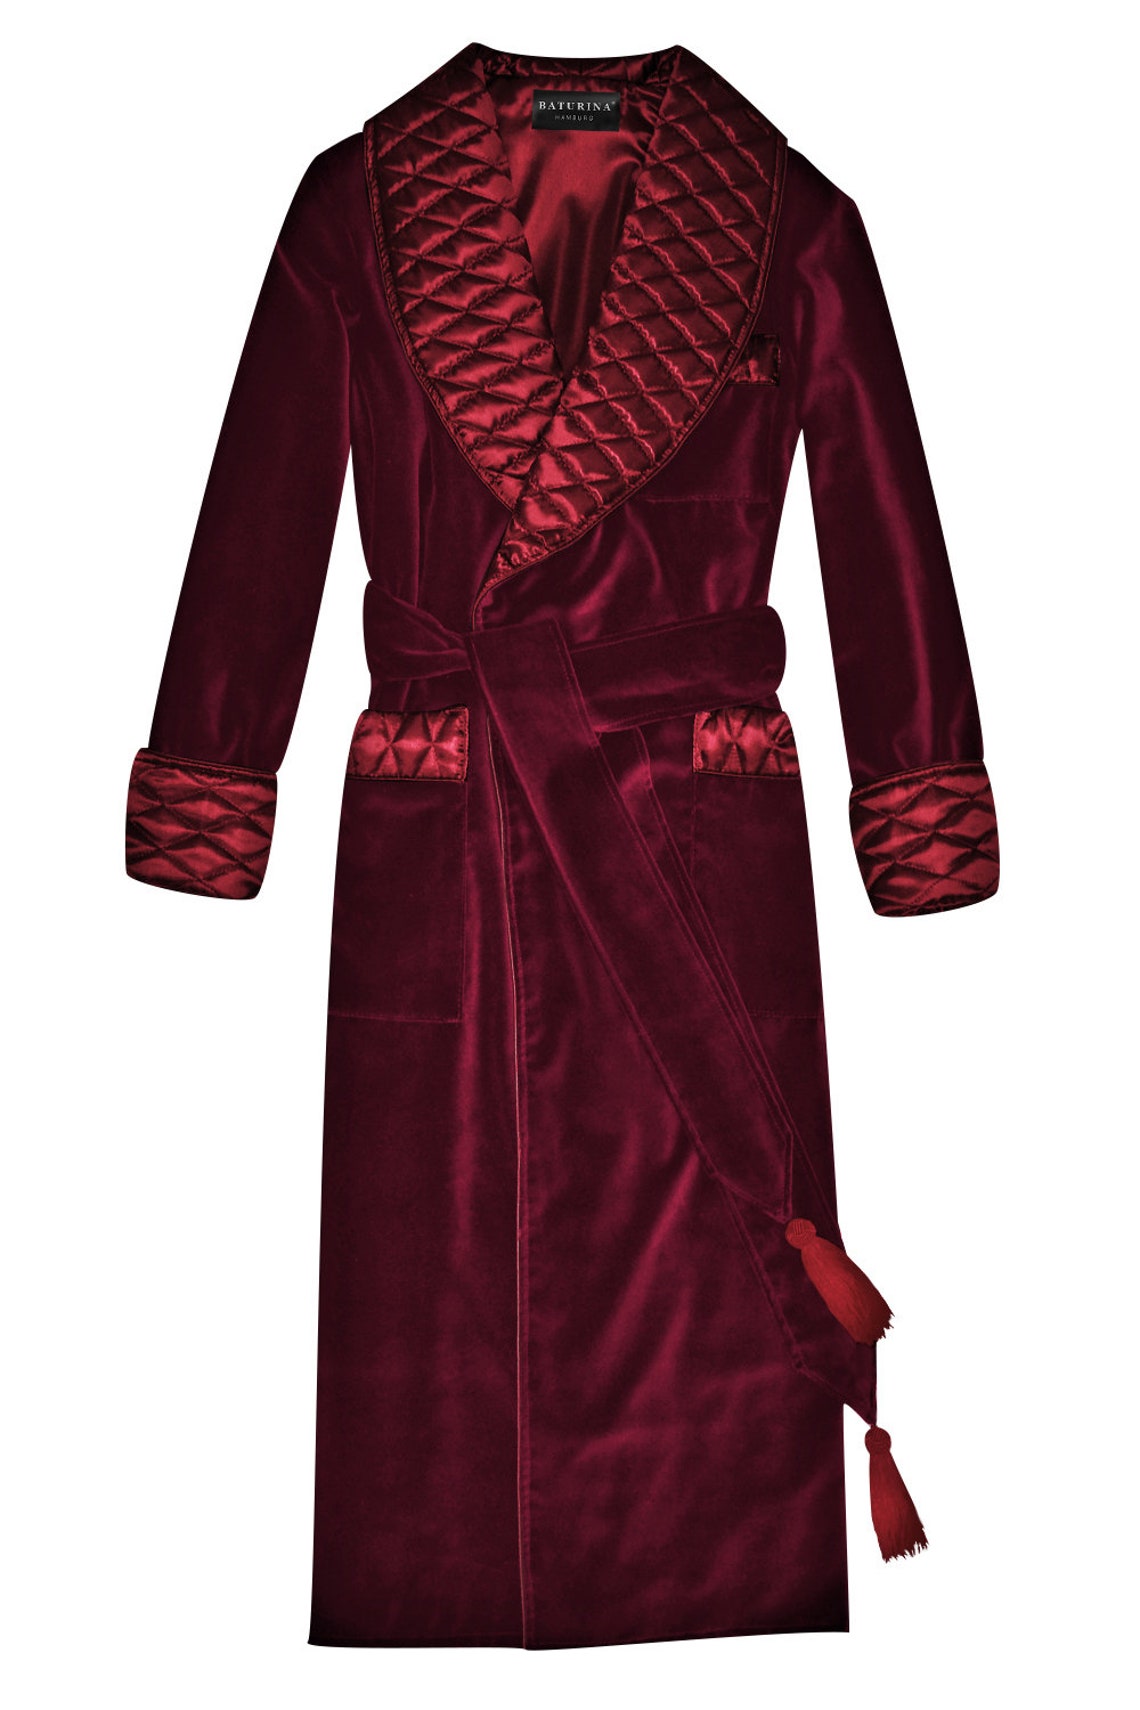 Mens Burgundy Velvet Robe Quilted Silk Dressing Gown Smoking | Etsy